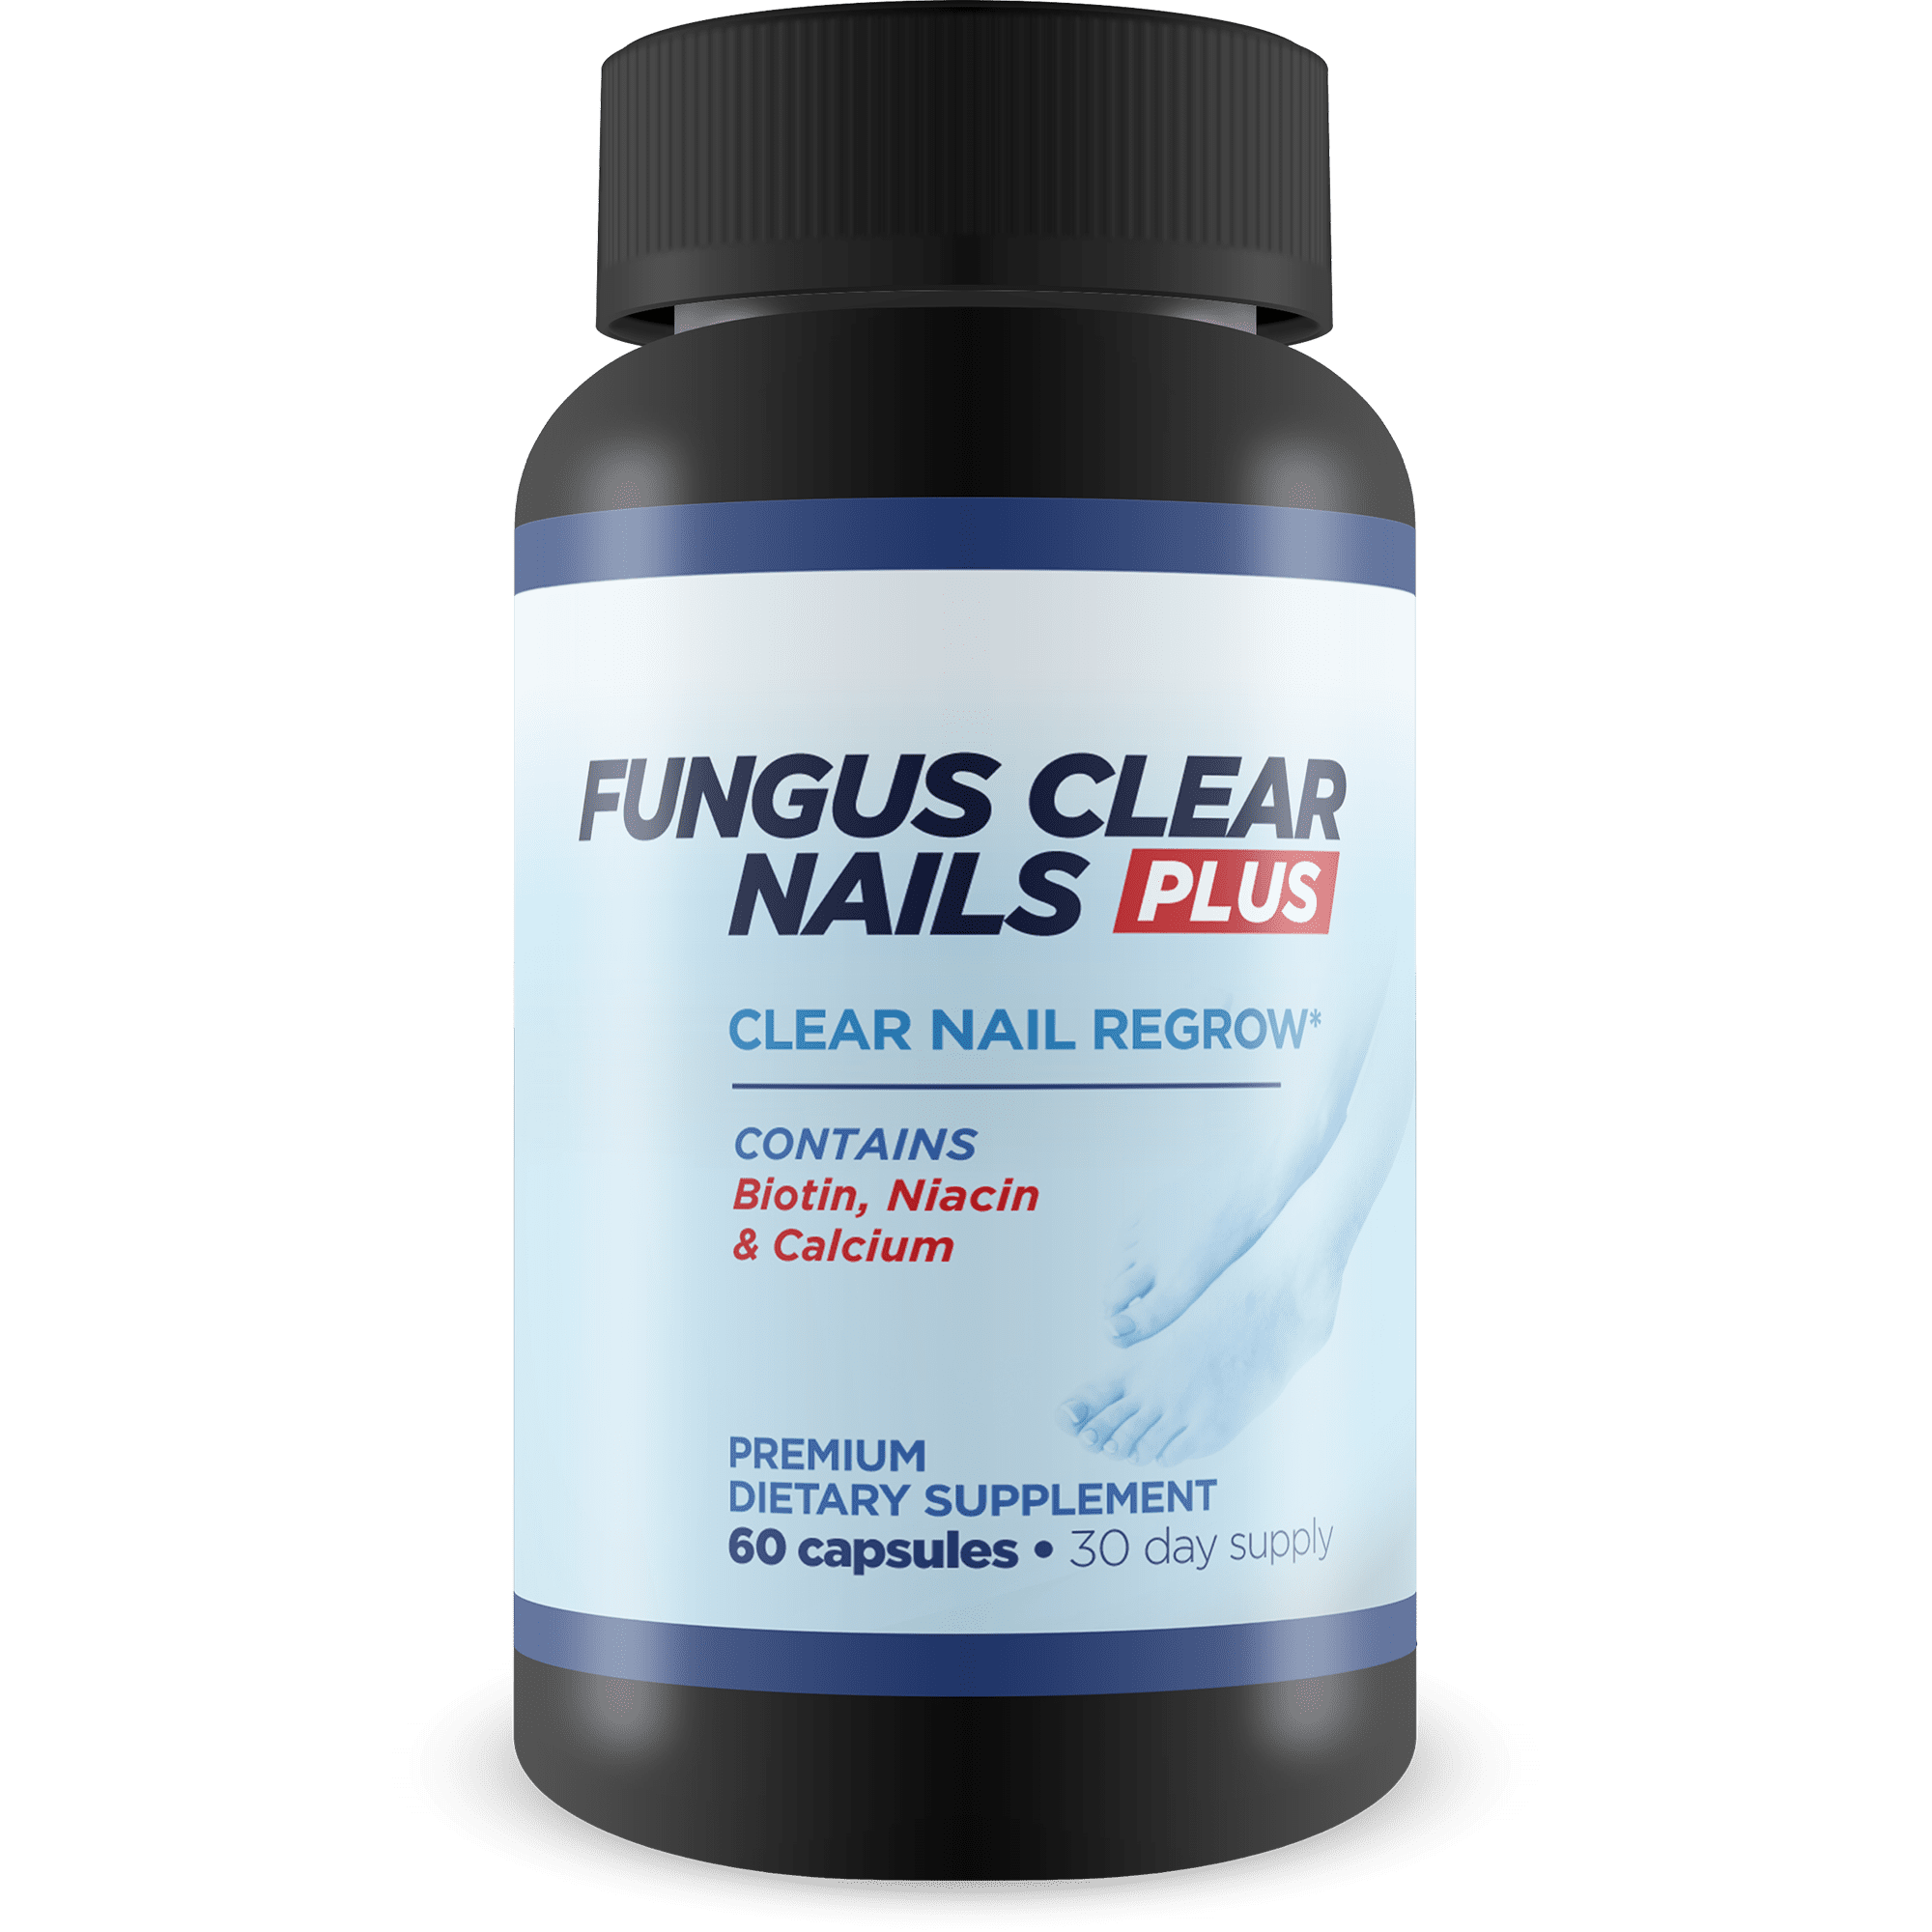 Fungus Clear Nails Plus Clear Nail Regrow Healthy Hair Skin And